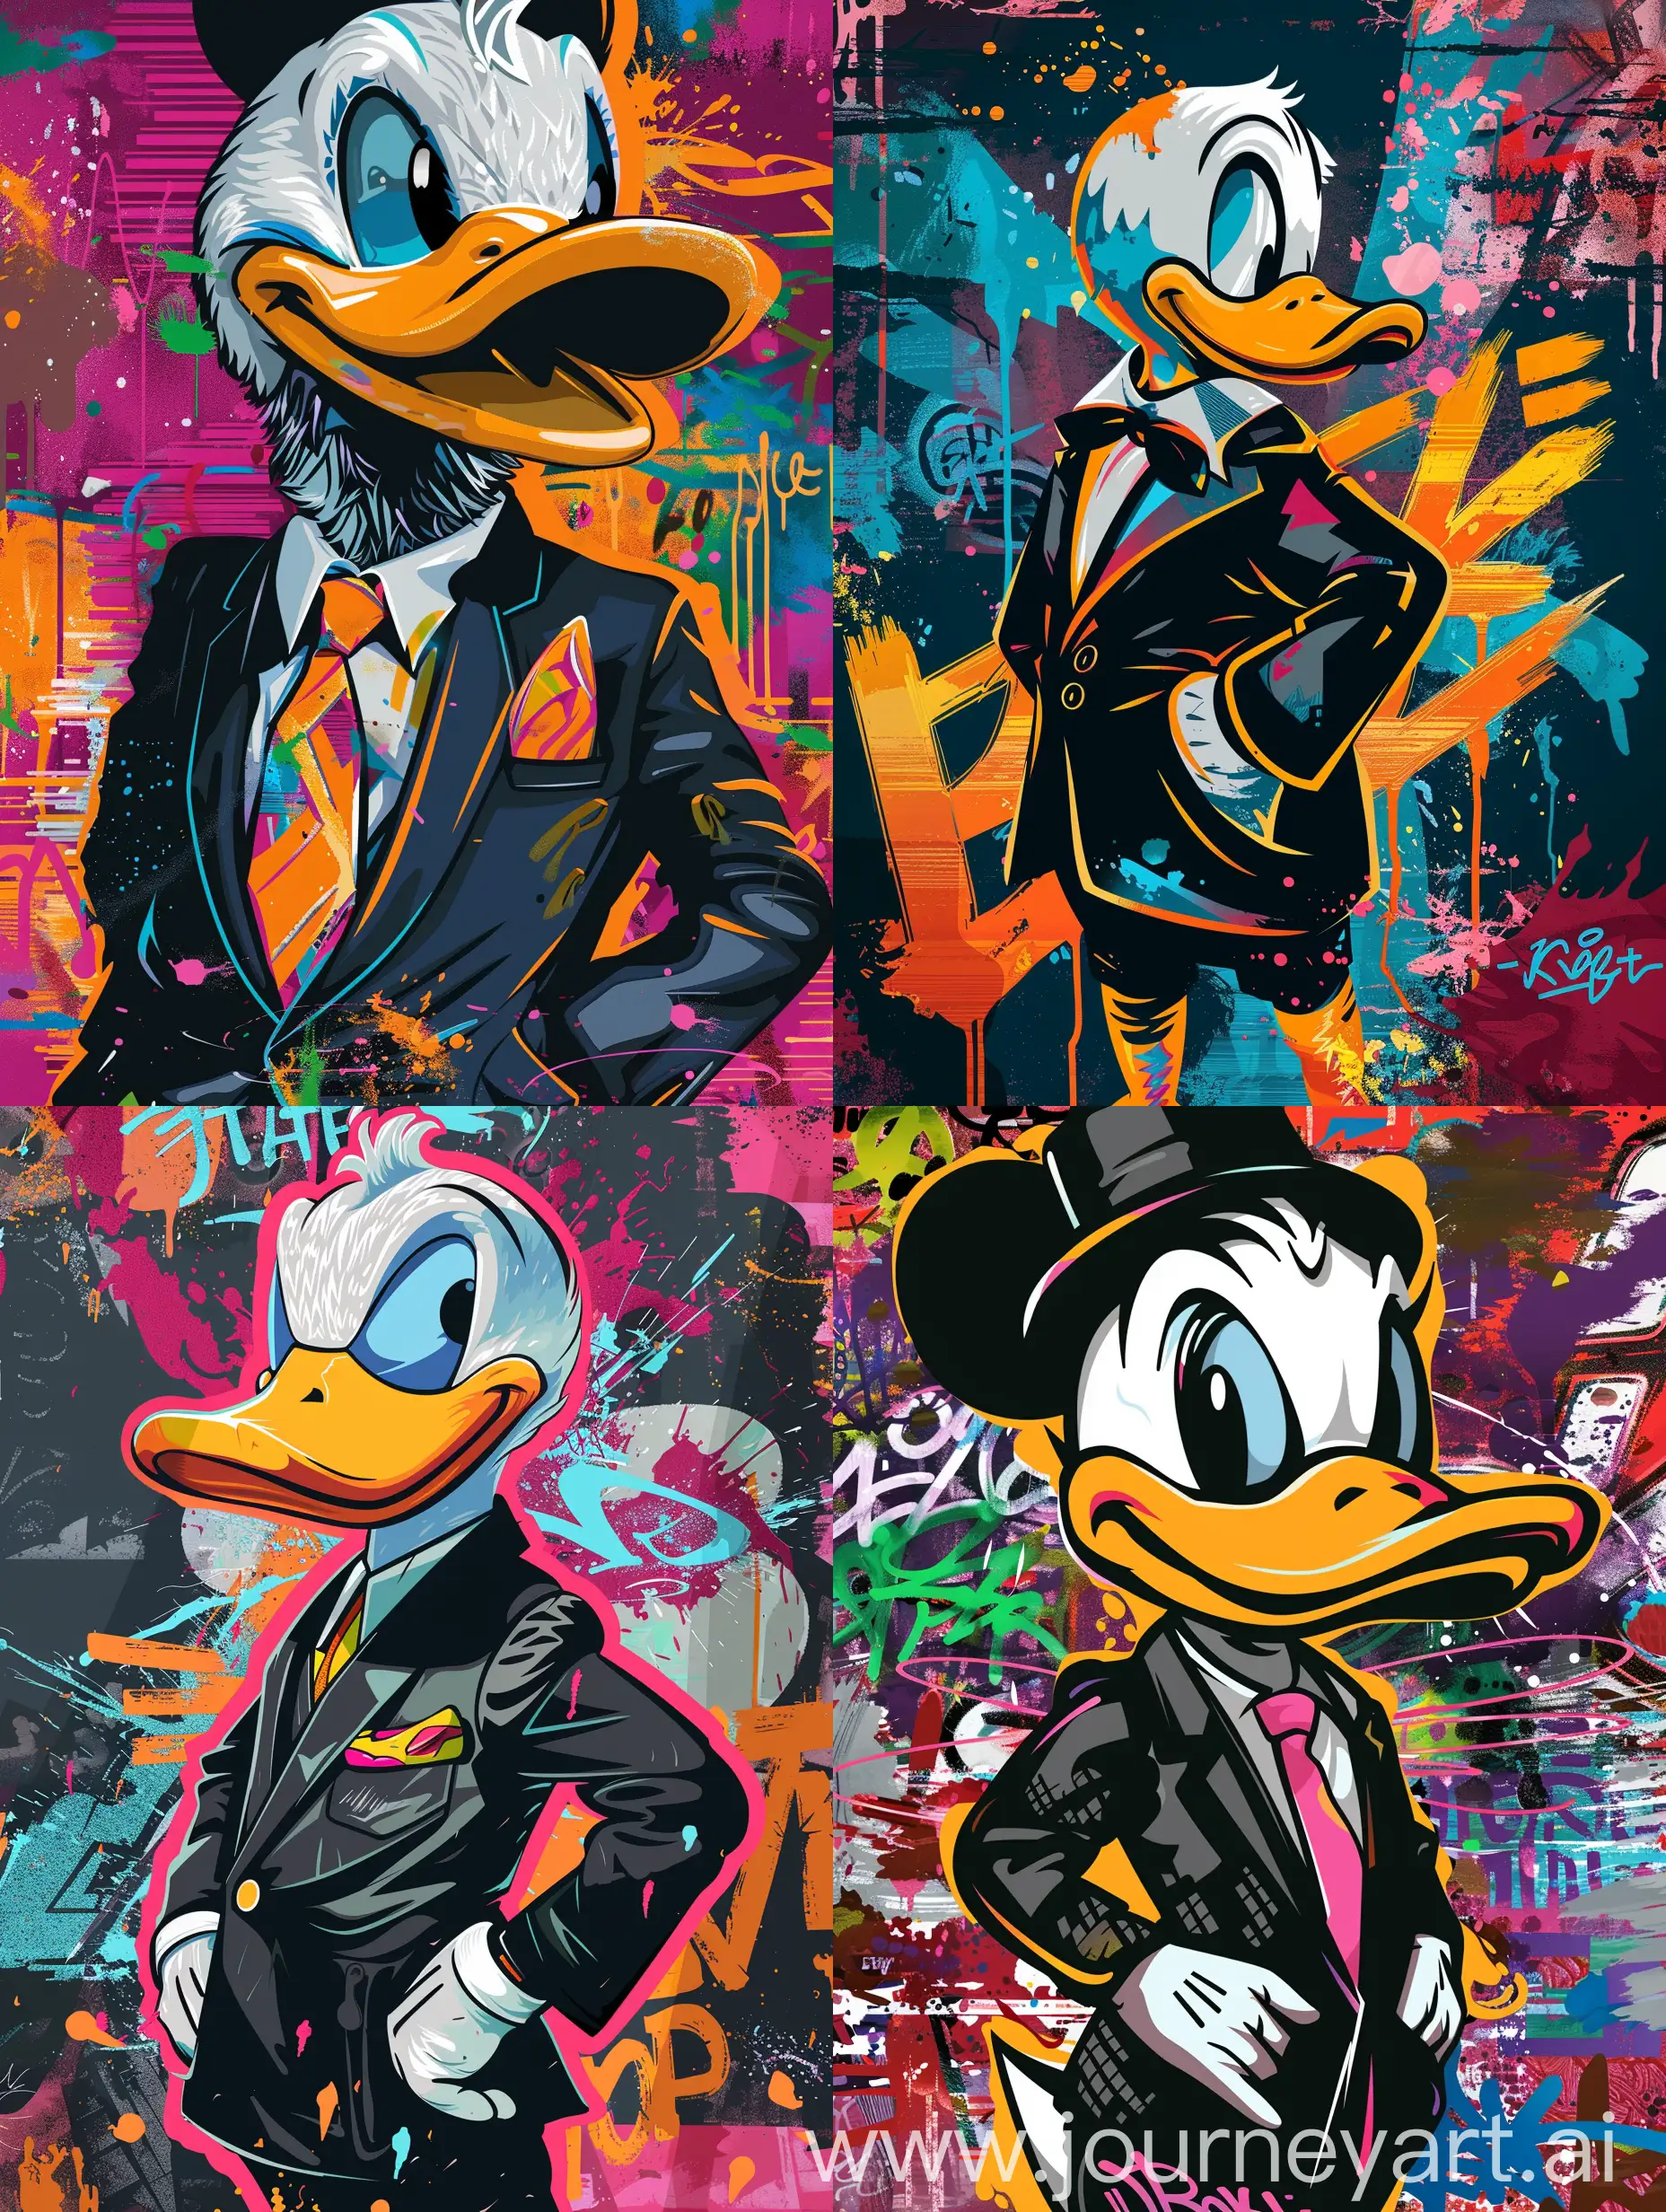 Urban-Style-Graffiti-Art-Donald-Duck-in-Black-Mens-Suit